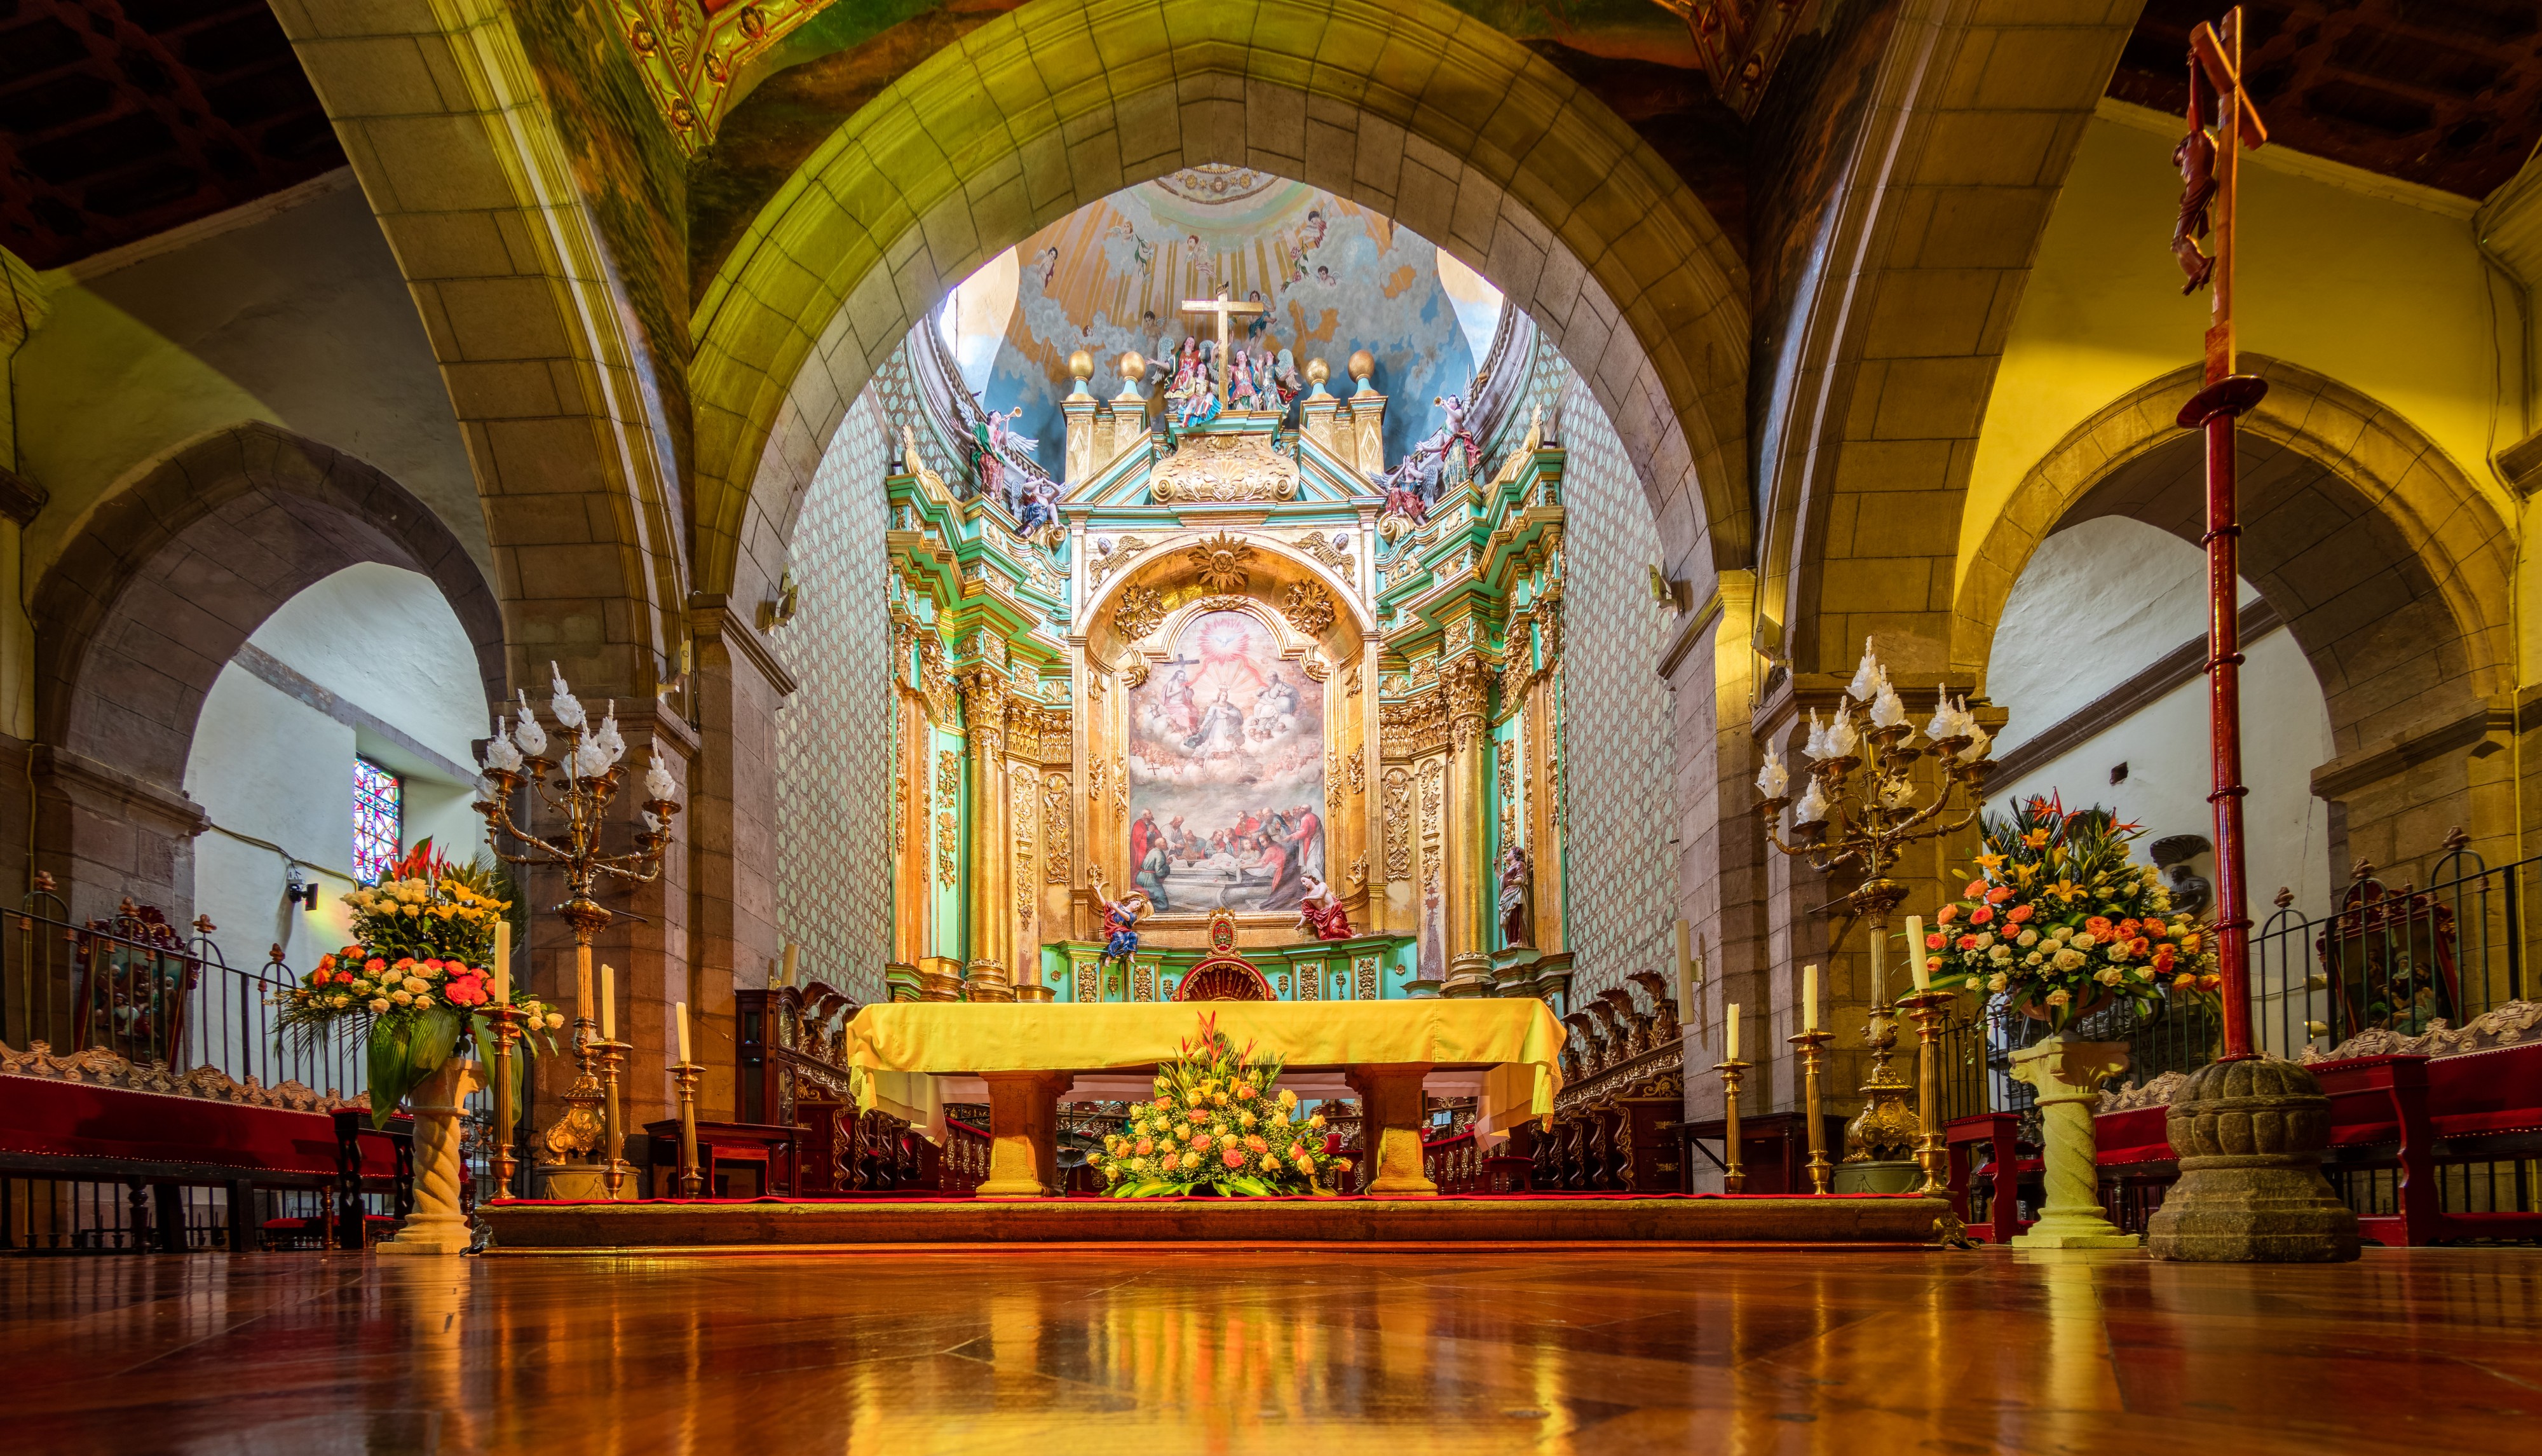 Catedral de Quito, Quito, Ecuador, 2015-07-22, DD 75-77 HDR